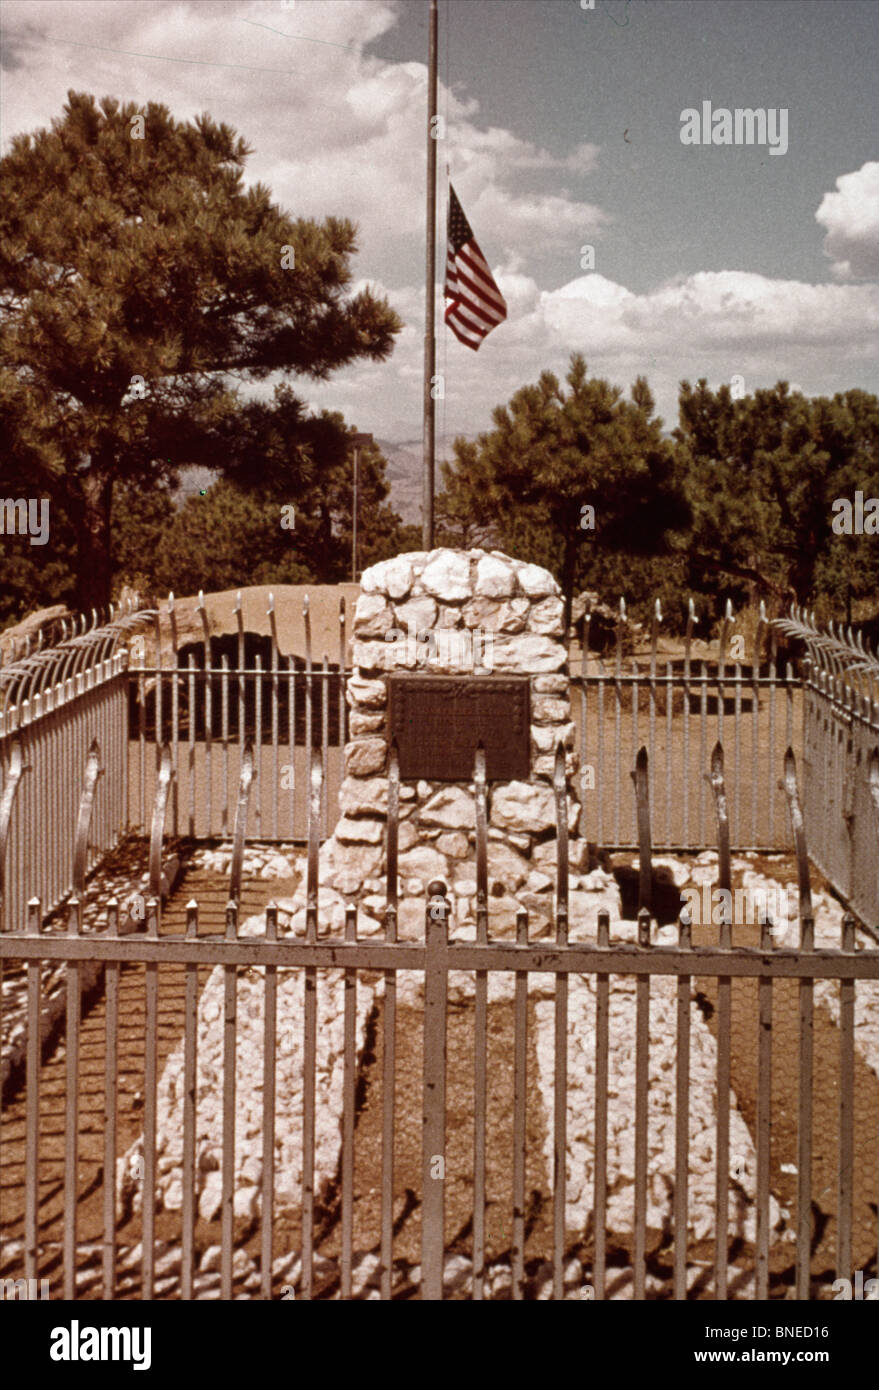 La tumba de Buffalo Bill Cody, Historia Americana Foto de stock